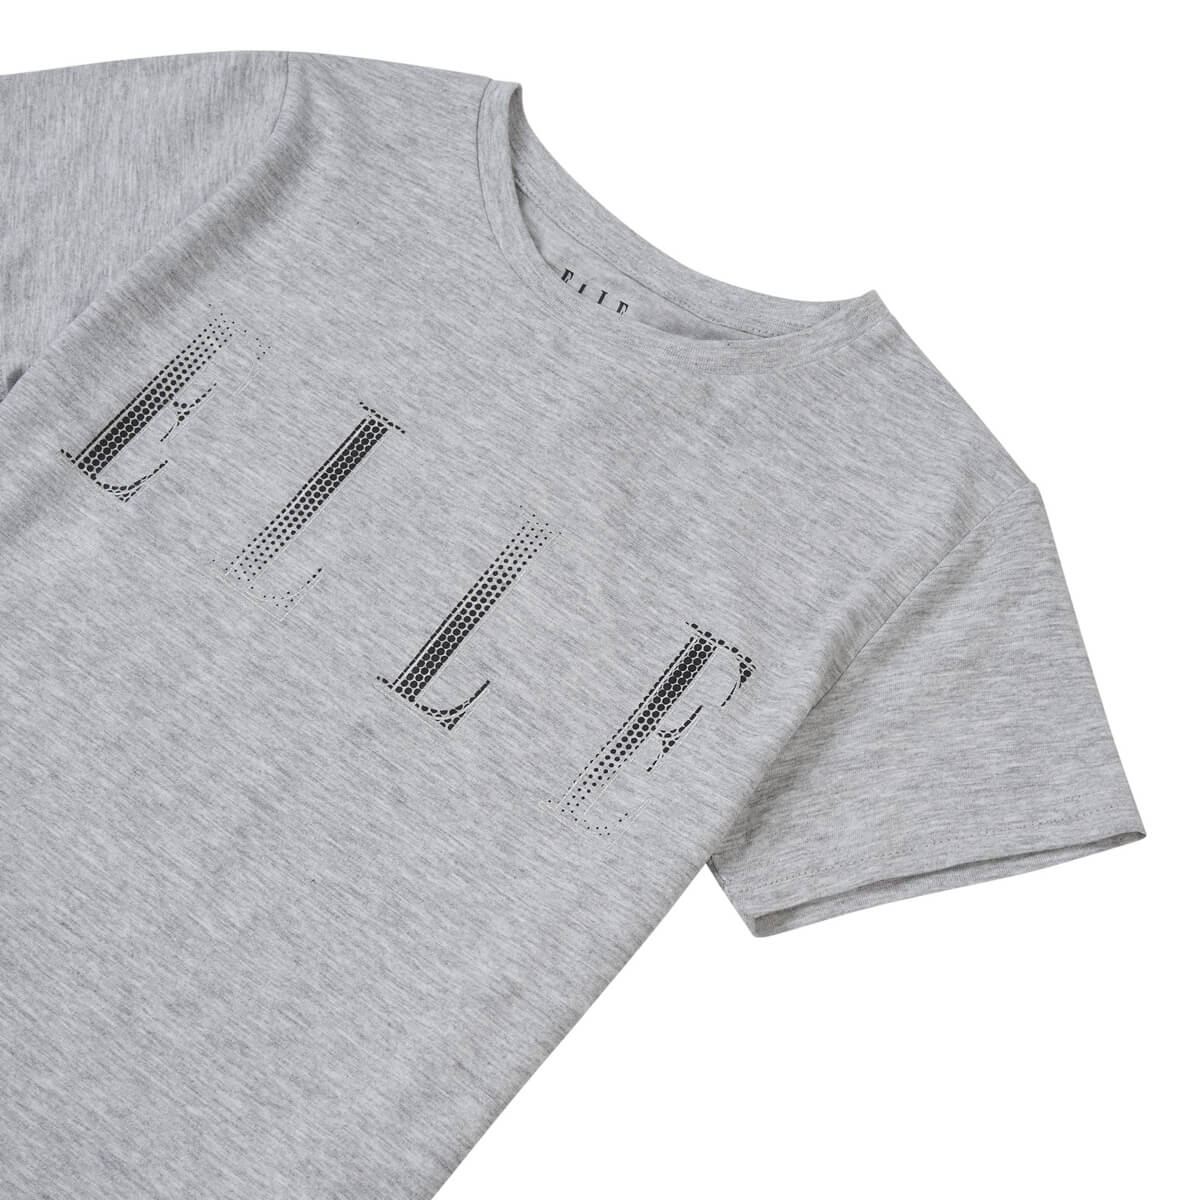 Elle Girls Grey Logo Fitted T-Shirt